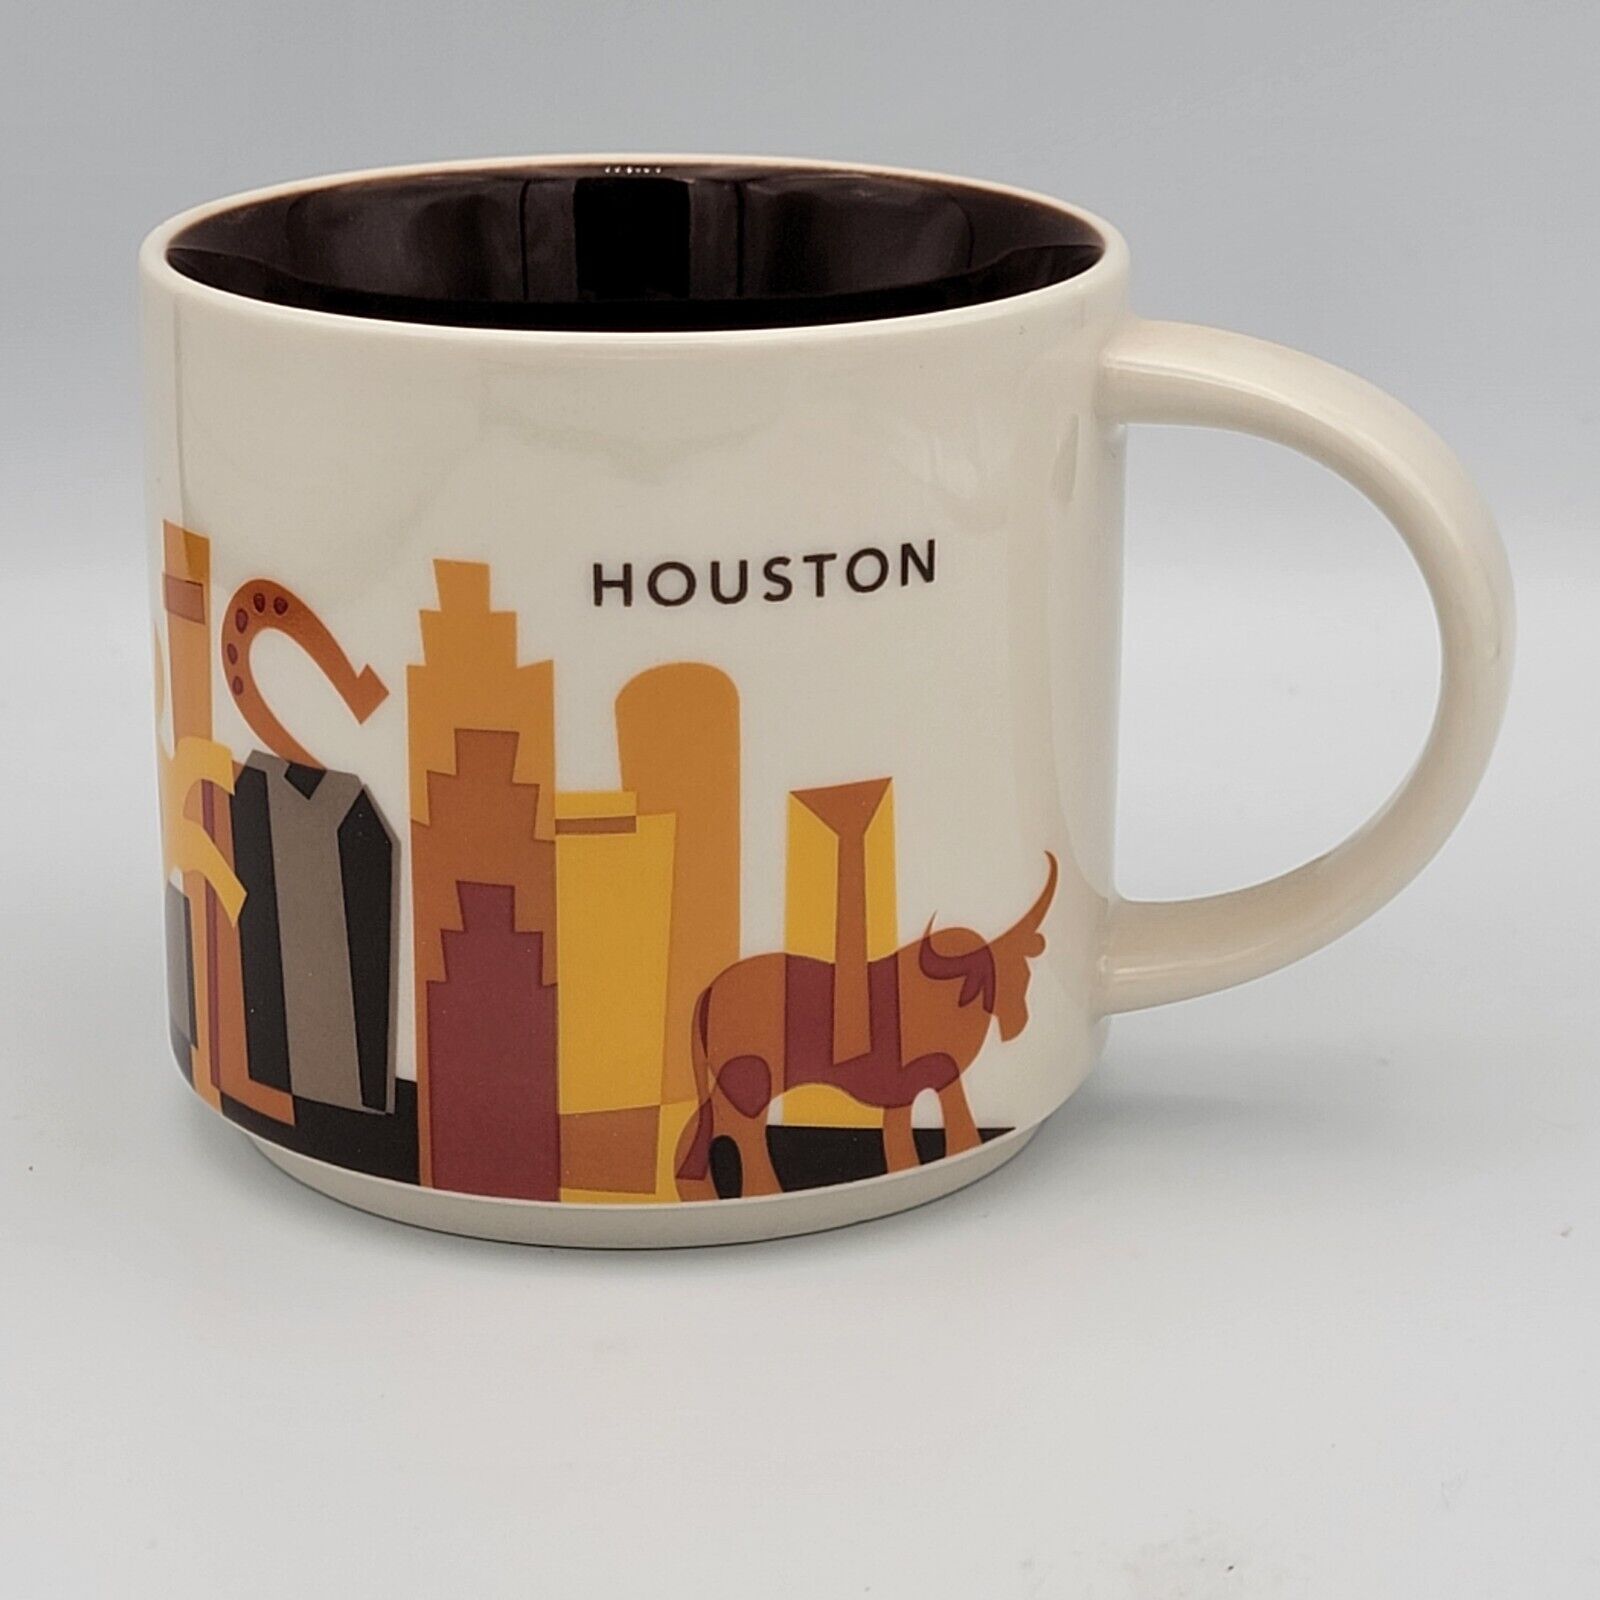 Starbucks Houston Texas Coffee Mug You Are Here Collection Series Tea Cup